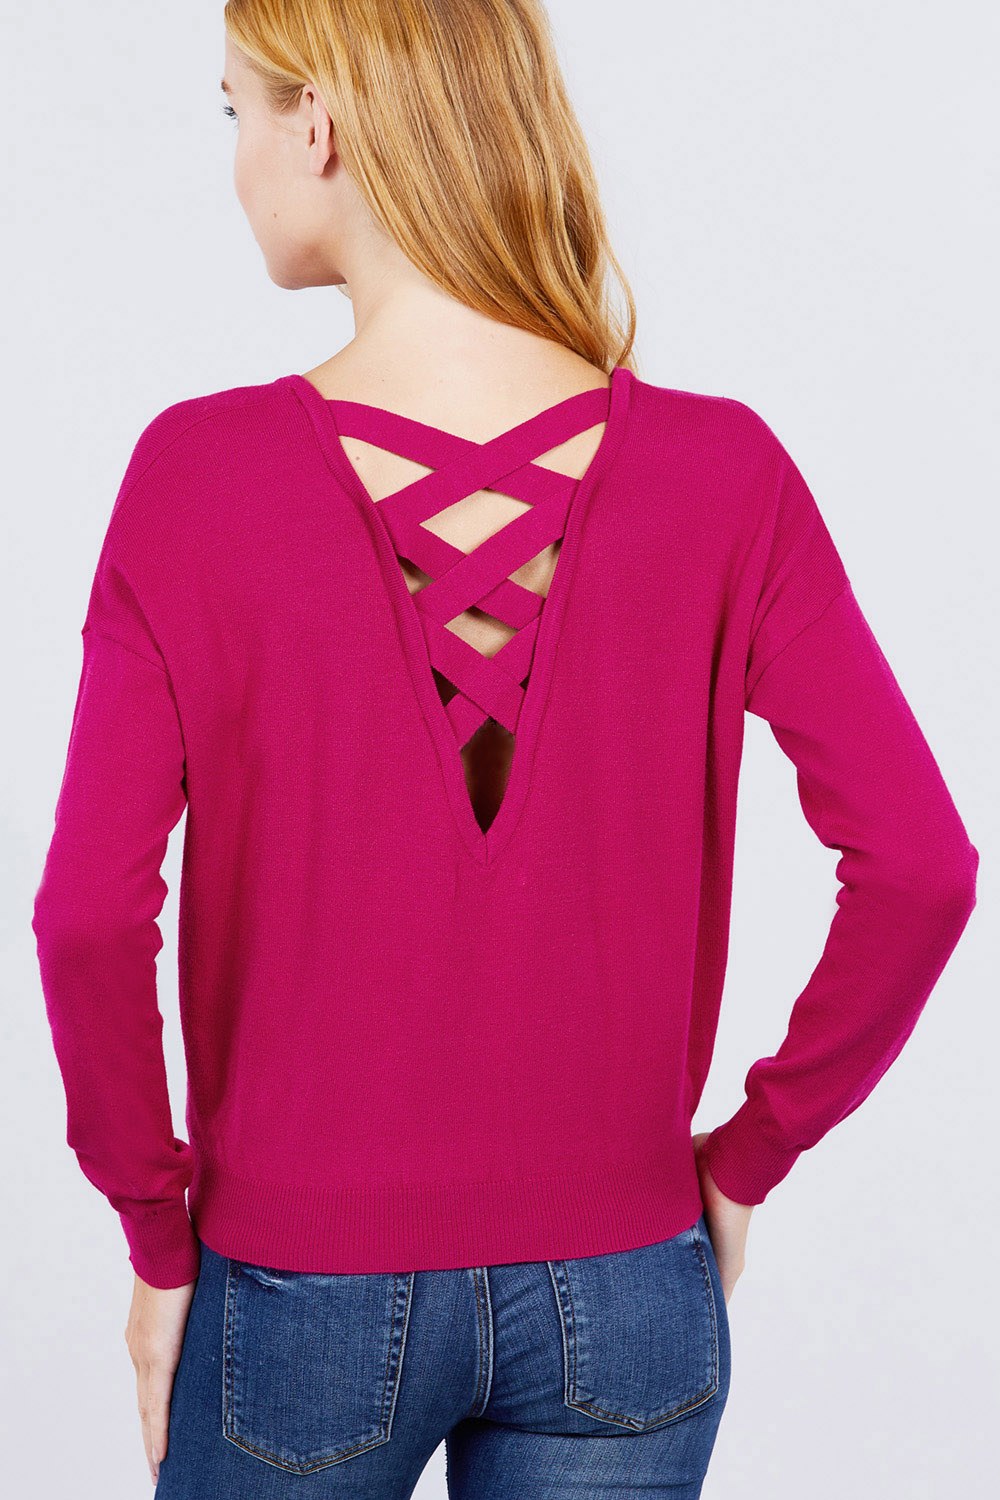 Long Sleeve V-neck Back Cross Sweater Tops in Magenta